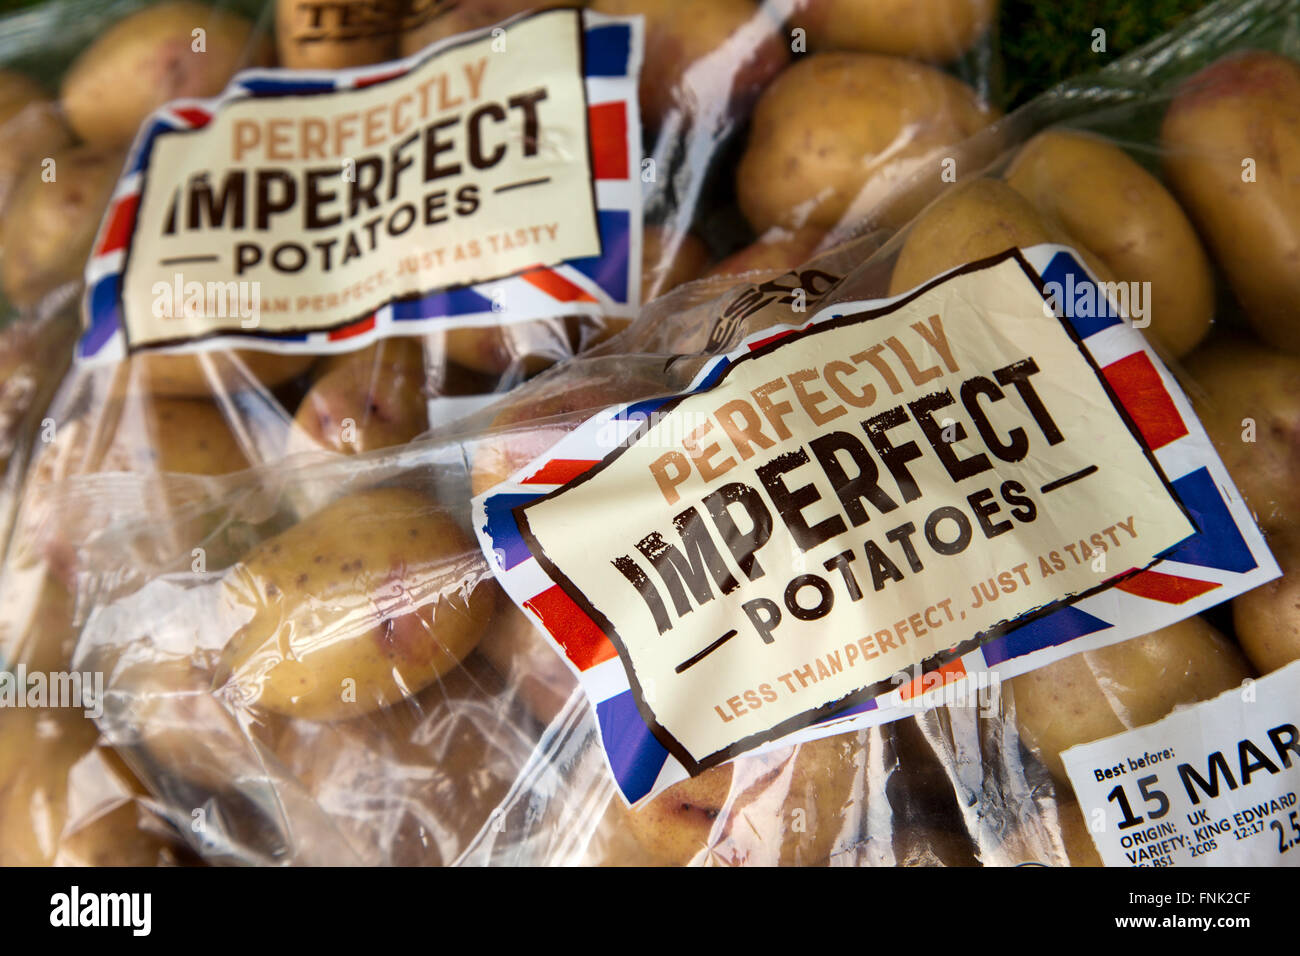 Tesco Supermarkt perfekt unperfekt Kartoffeln verkauft in Großbritannien. Stockfoto